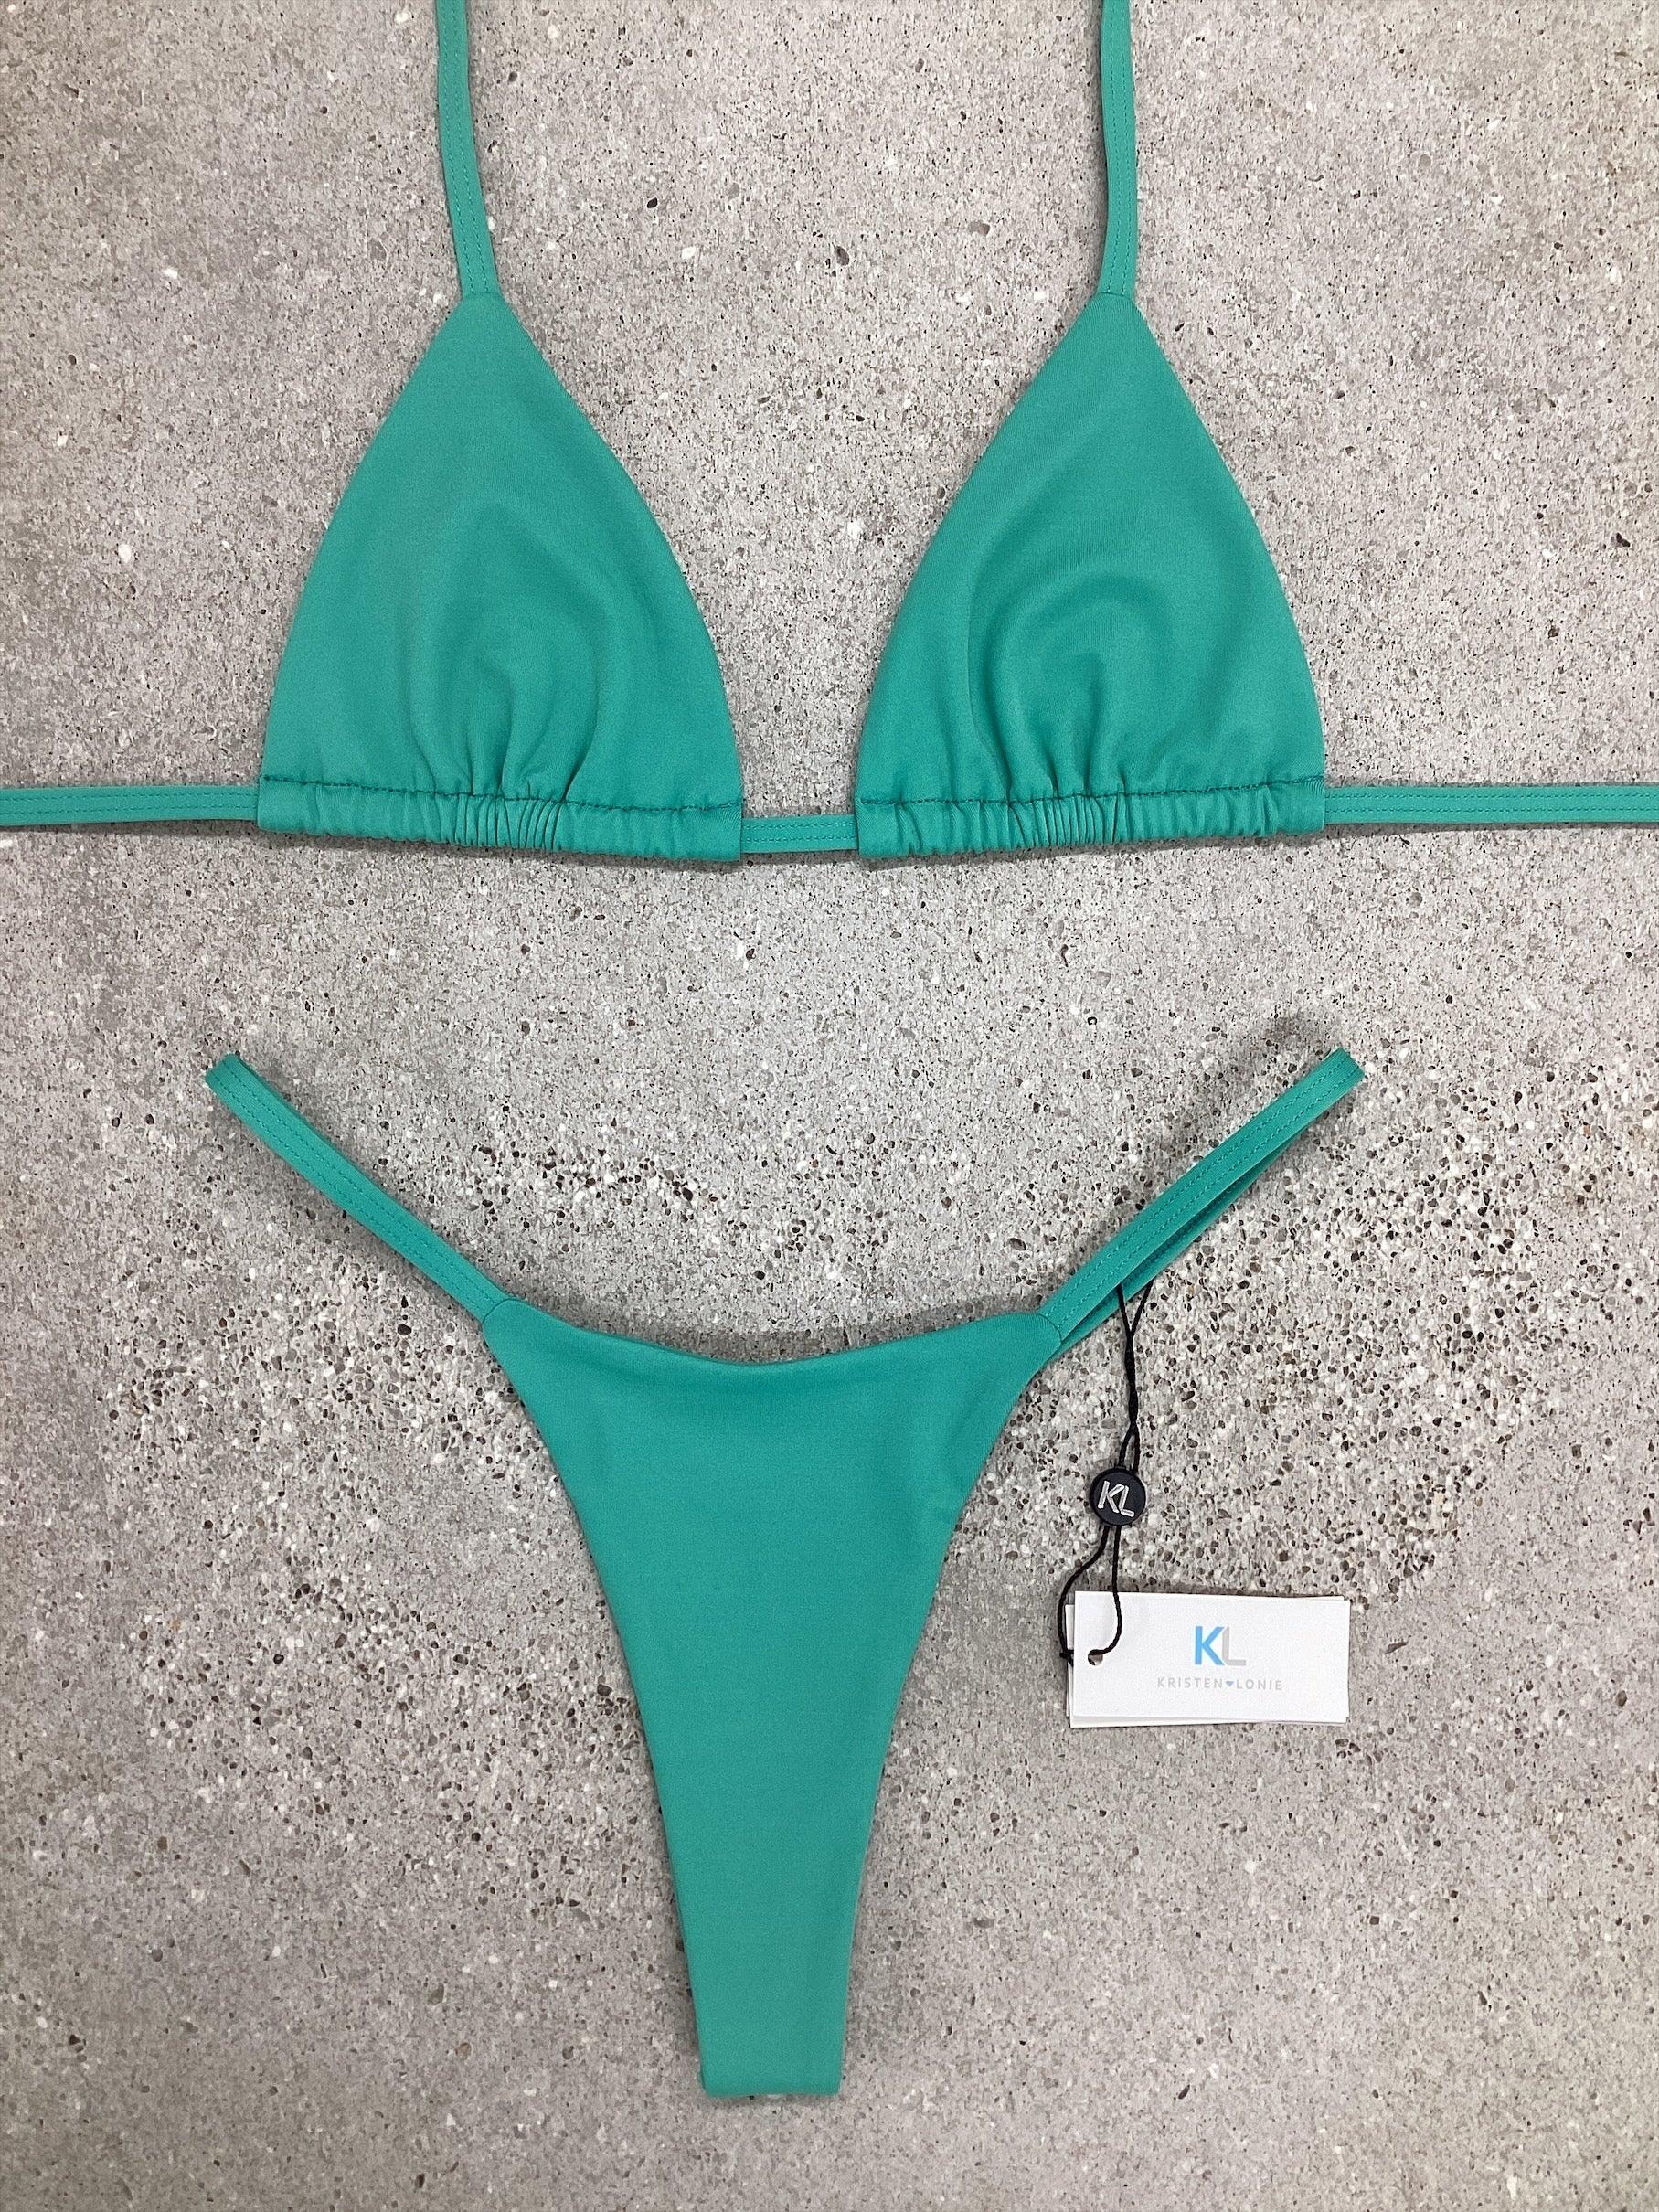 Spring Green Bikini Top - Kristen Lonie Swimwear